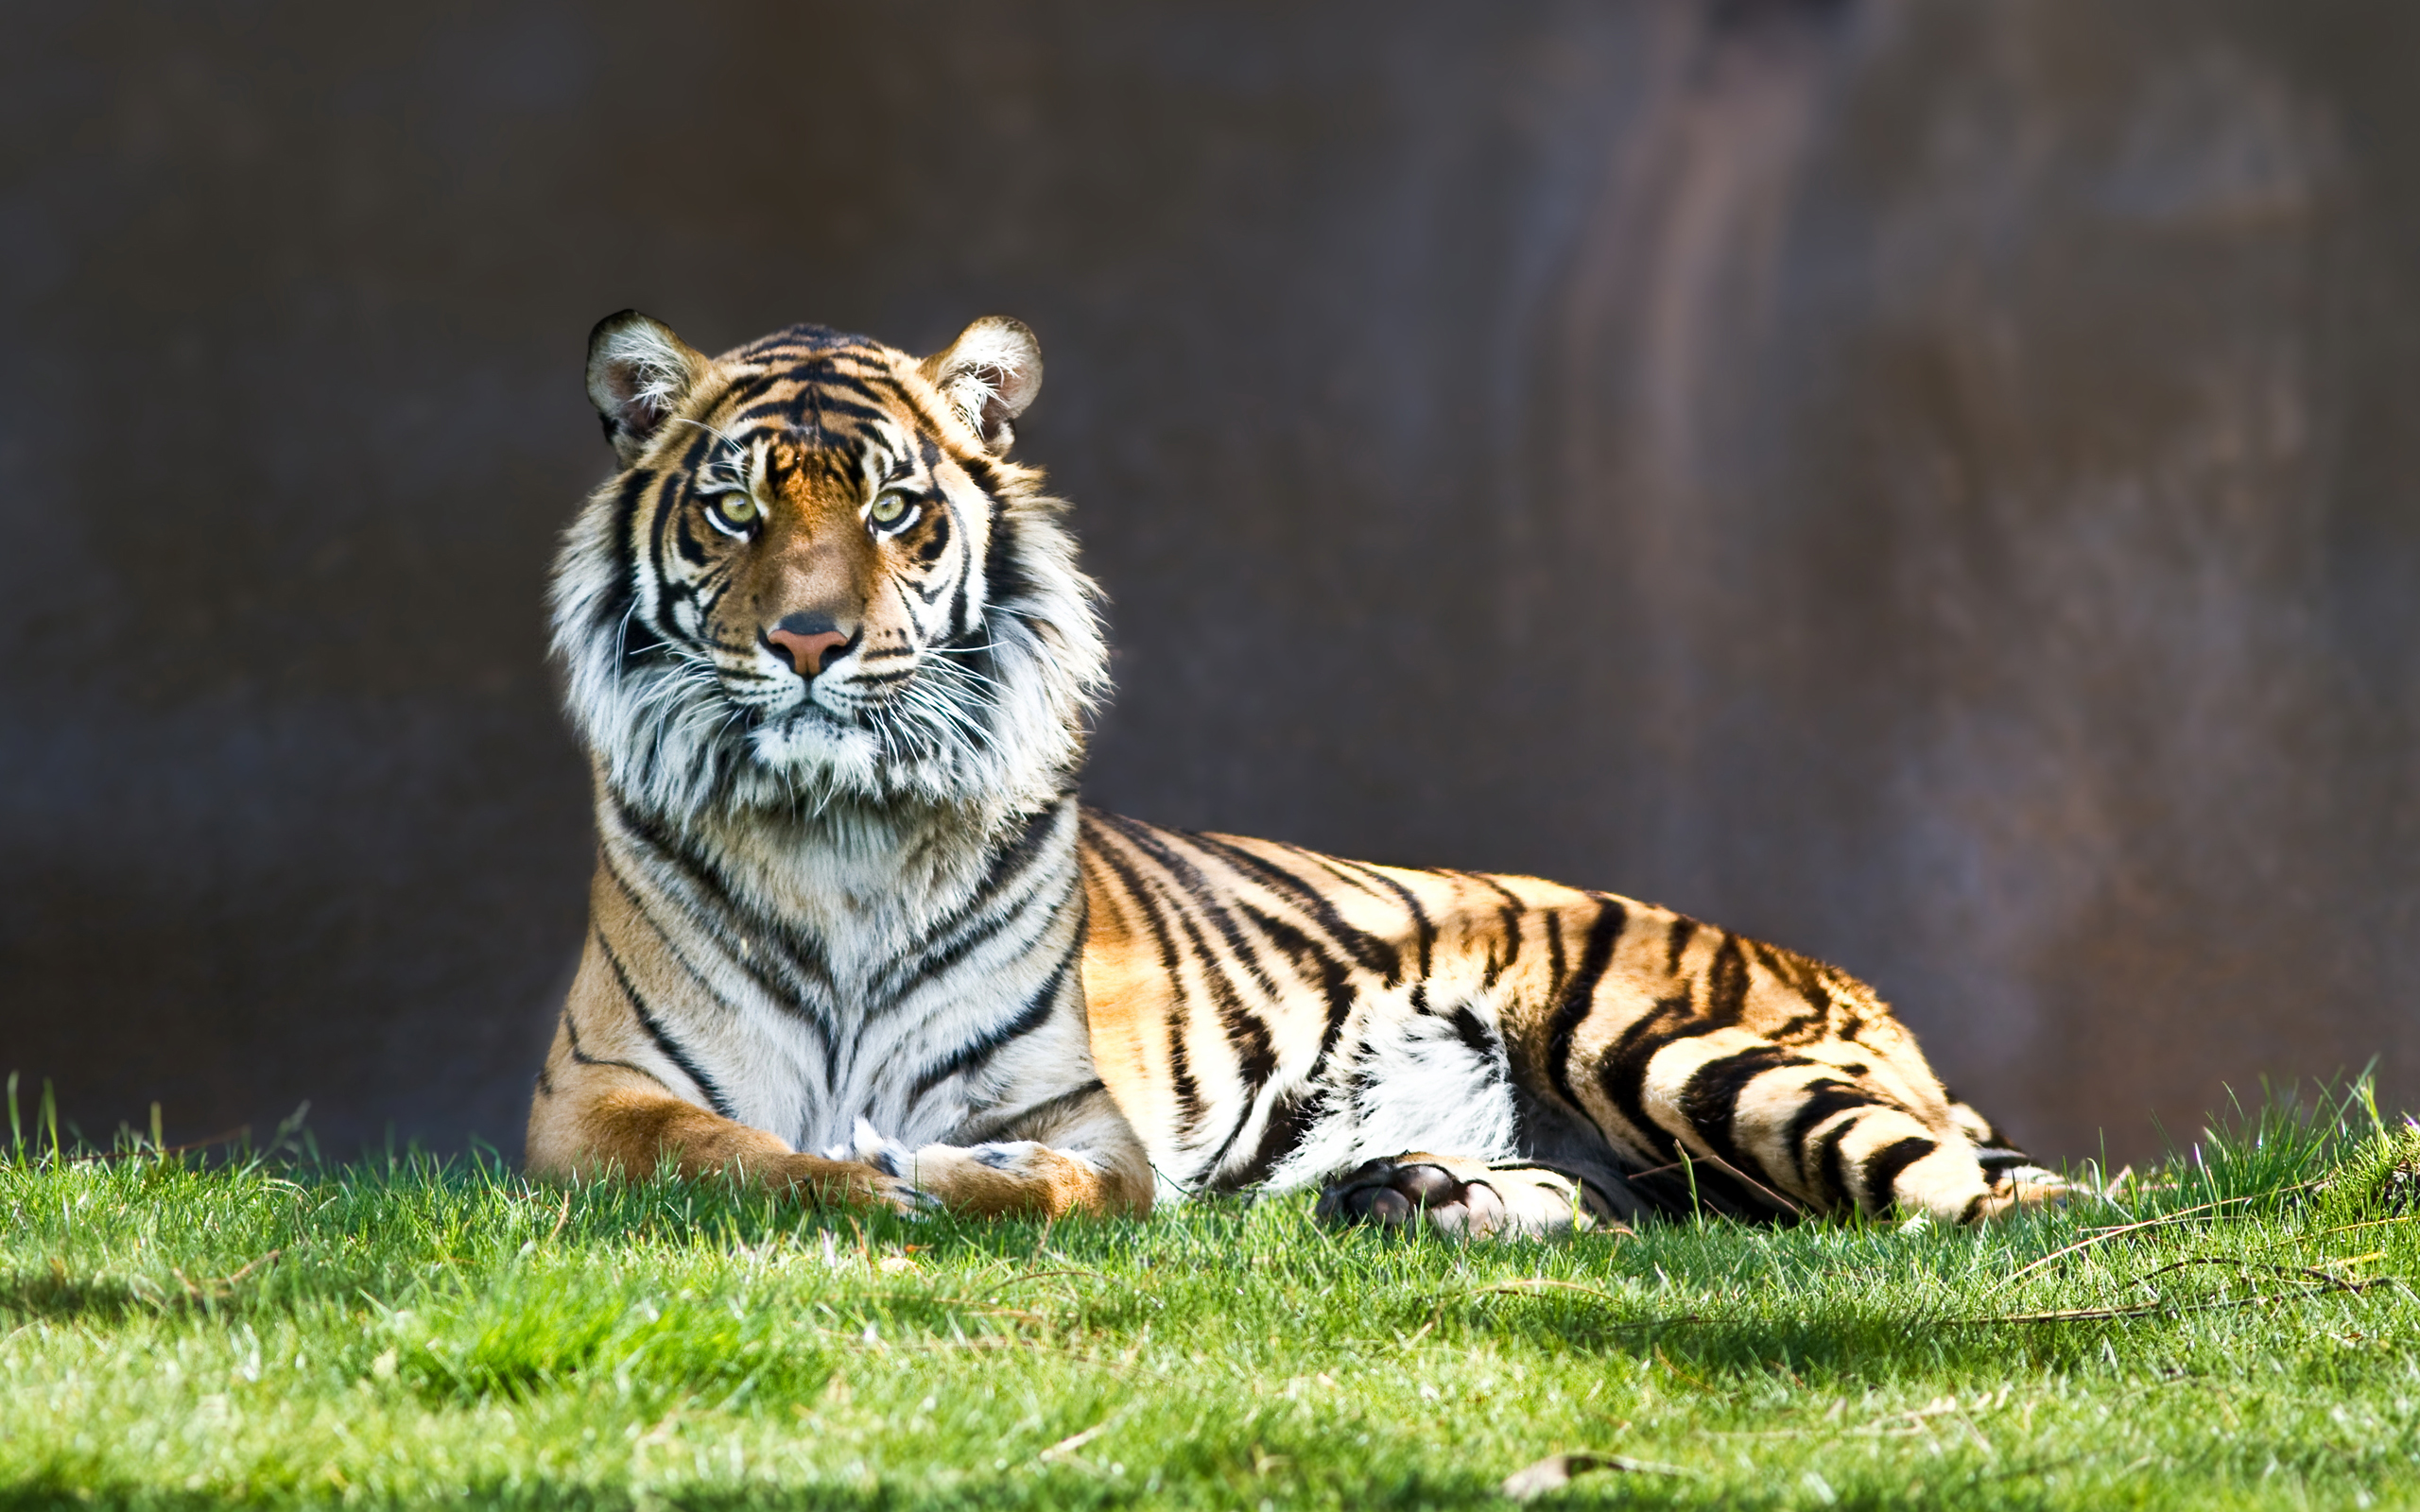 Tiger staring photo